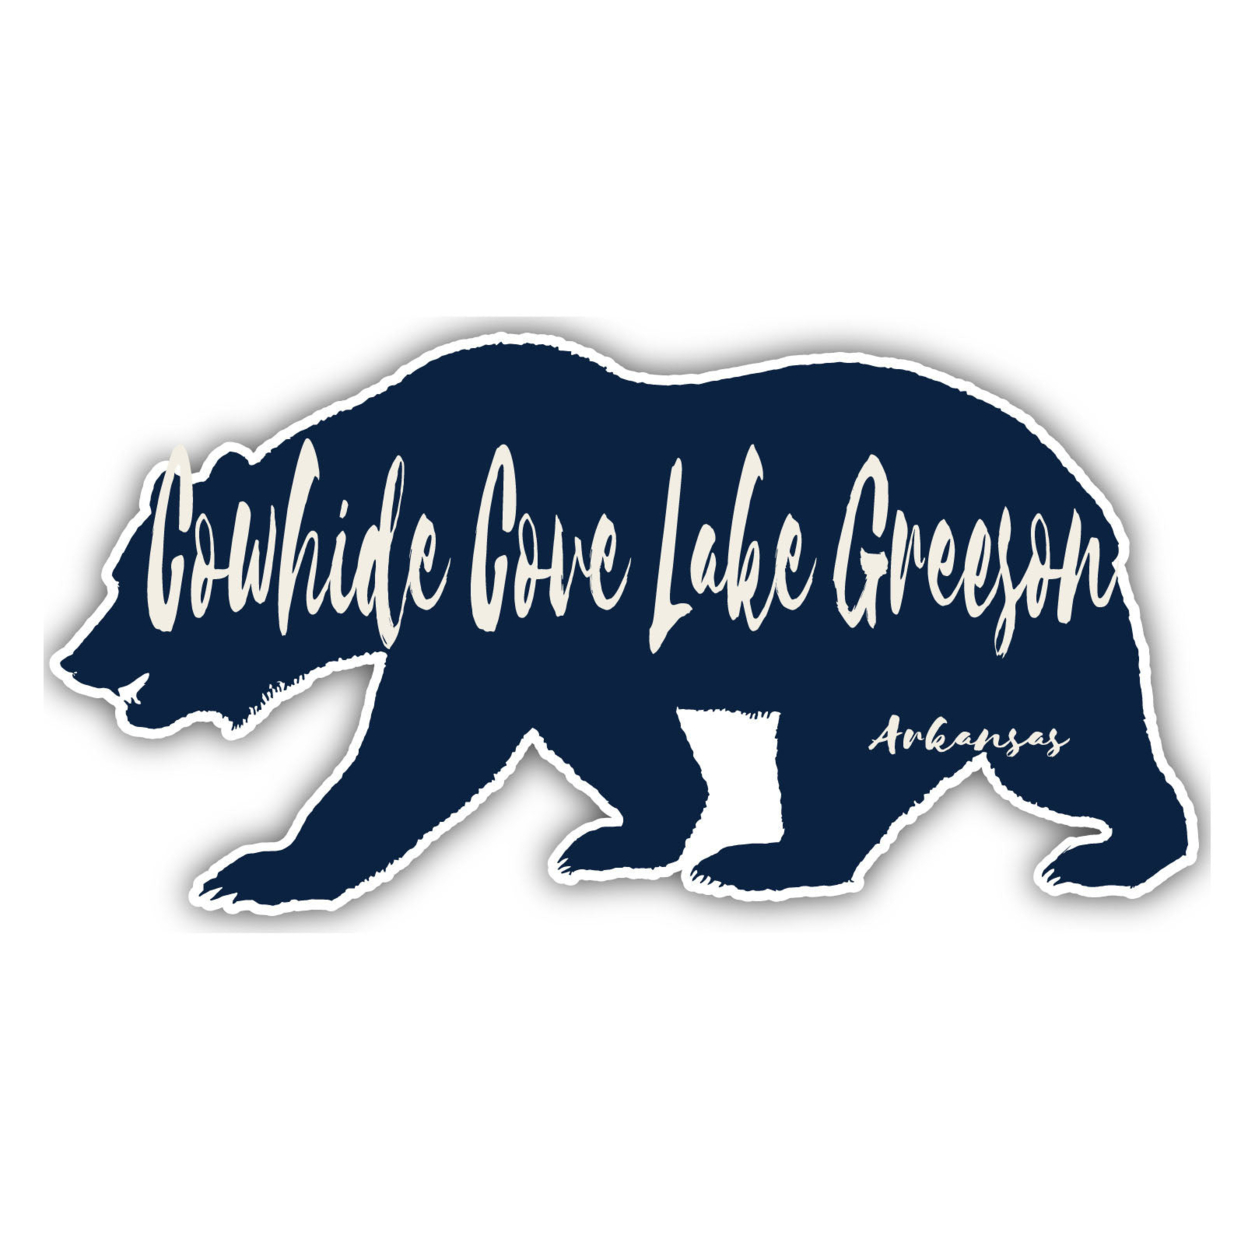 Cowhide Cove Lake Greeson Arkansas Souvenir Decorative Stickers (Choose Theme And Size) - Single Unit, 12-Inch, Bear